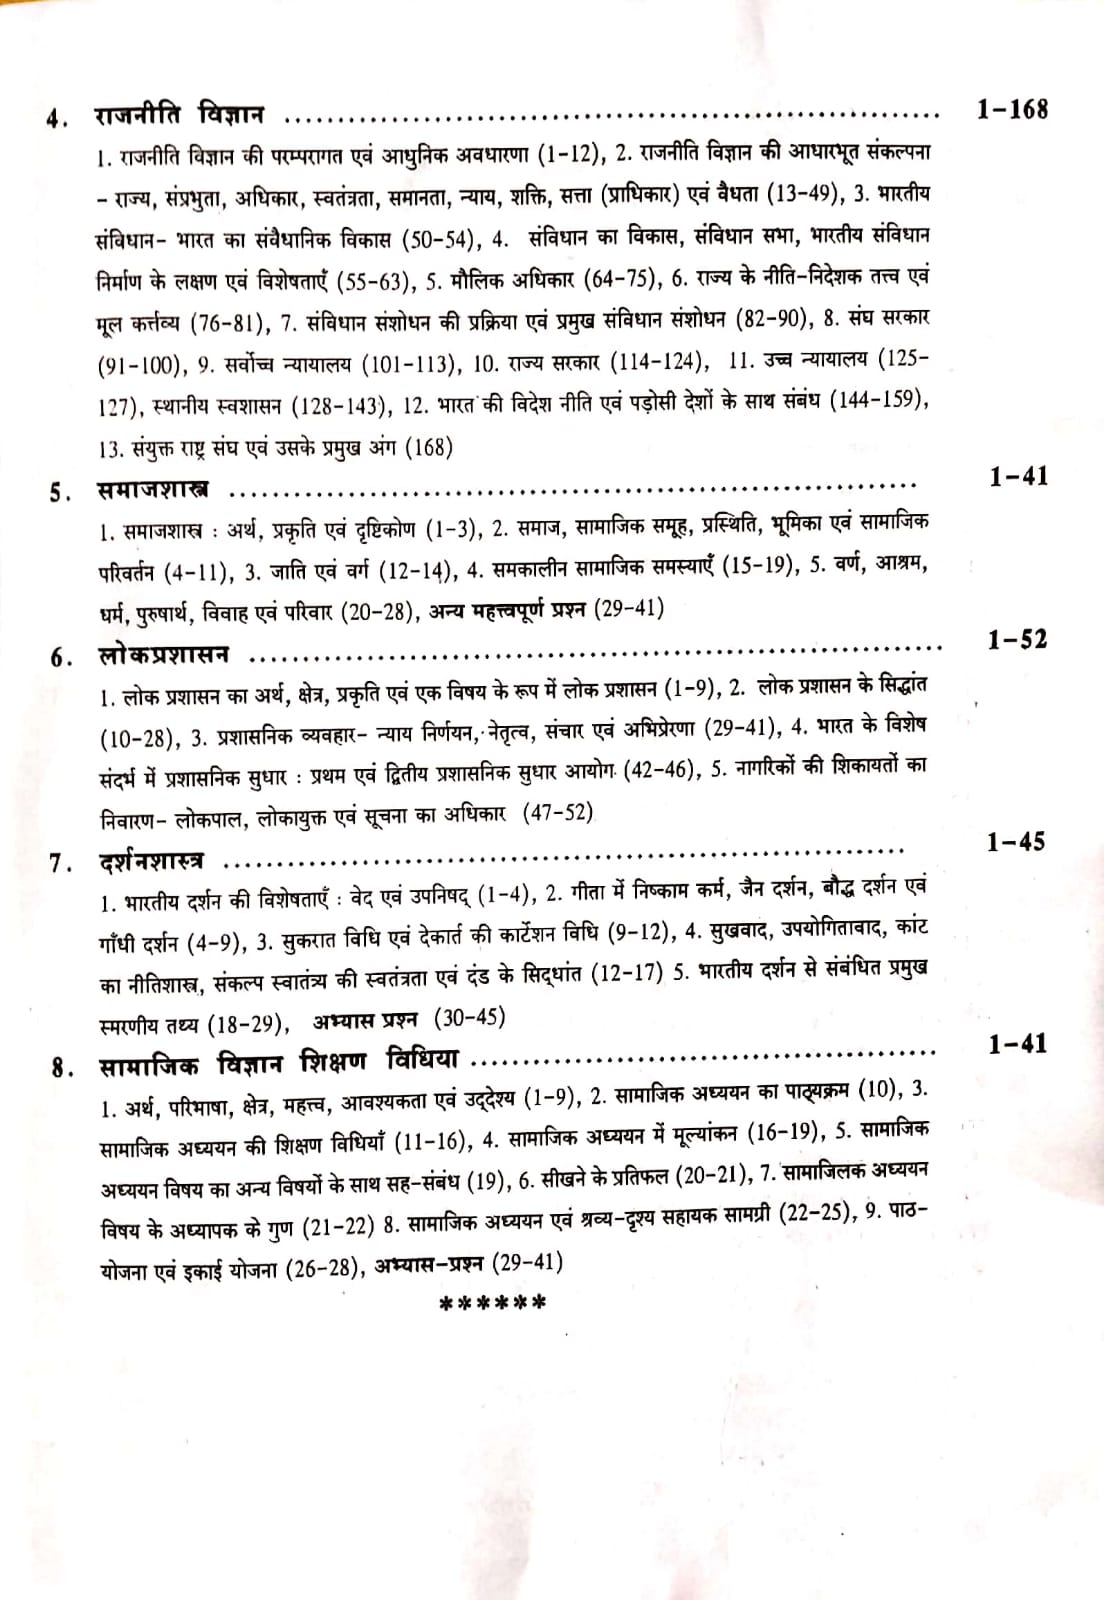 PCP Parishkar Second Grade Social Science (Samajik Vigyan) With Free Solved Paper By Dr. Raghav Prakash And Savita Paiwal For RPSC 2nd Grade Teacher Exam Latest Edition